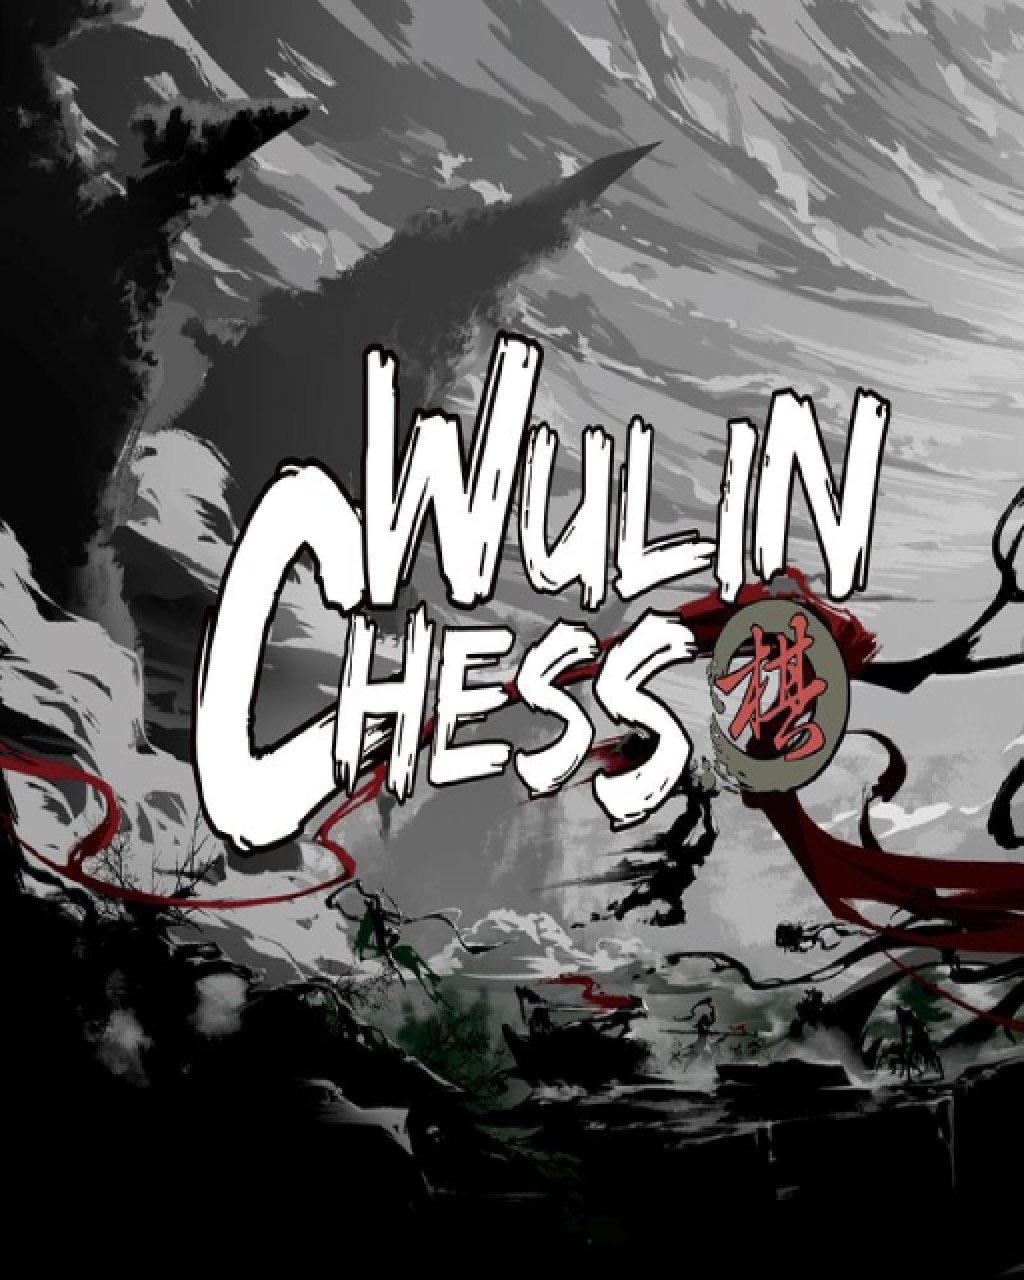 Wulin Chess